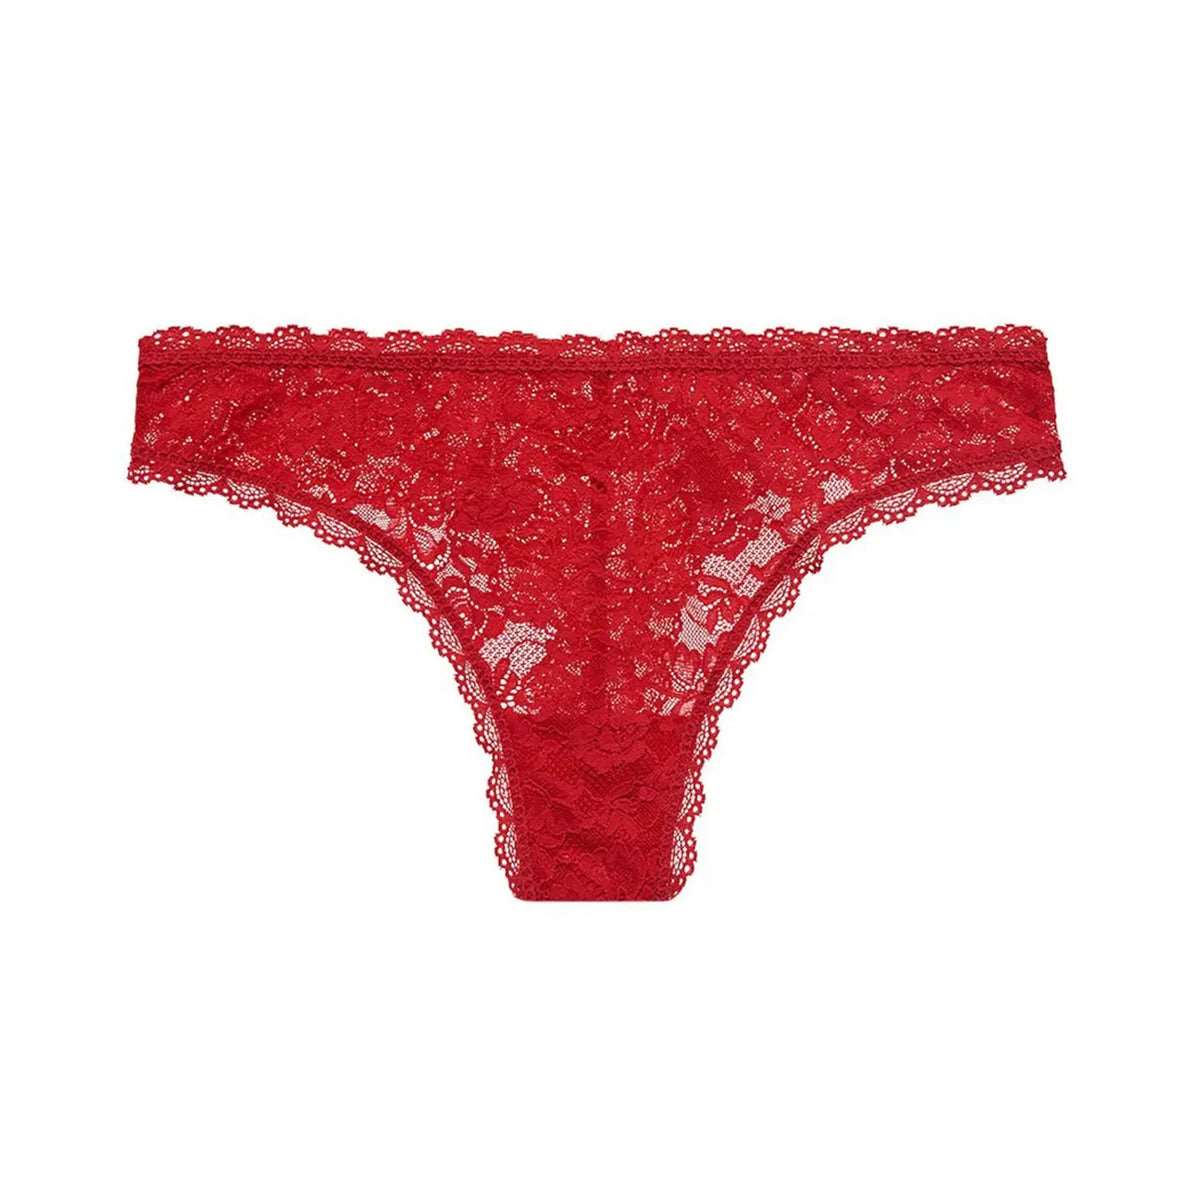 Rosalyn Magenta Satin and Lace Thong - sizes 4-16 - Toronto